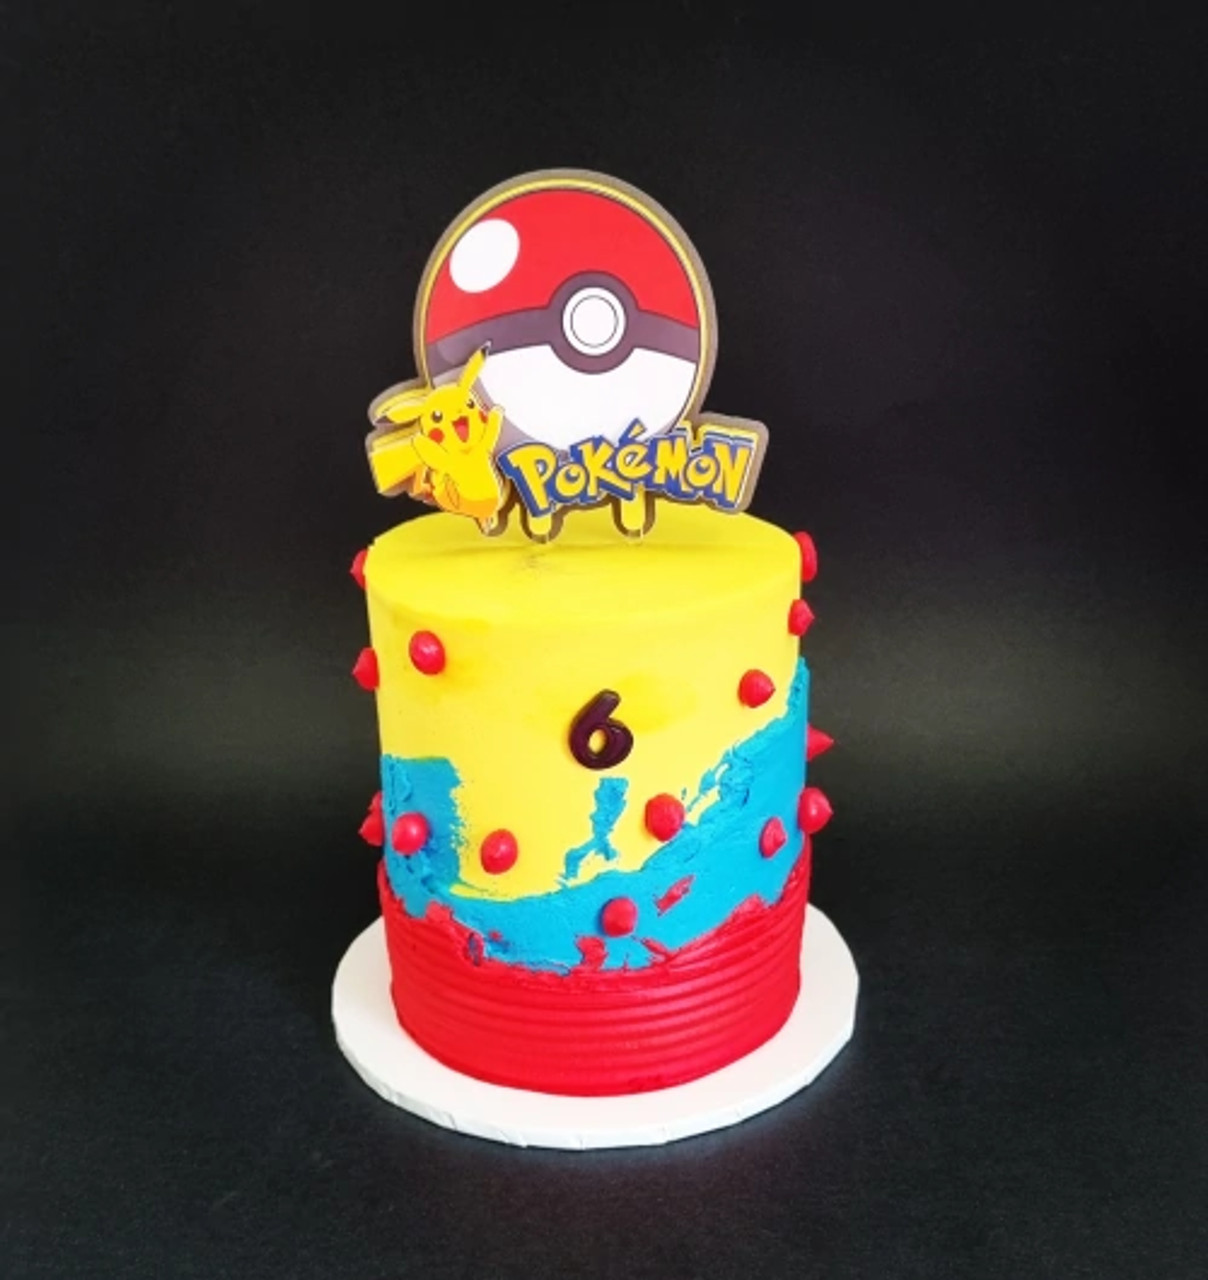 Buy Pikachu Pokemon Cakes Delivery Online@799